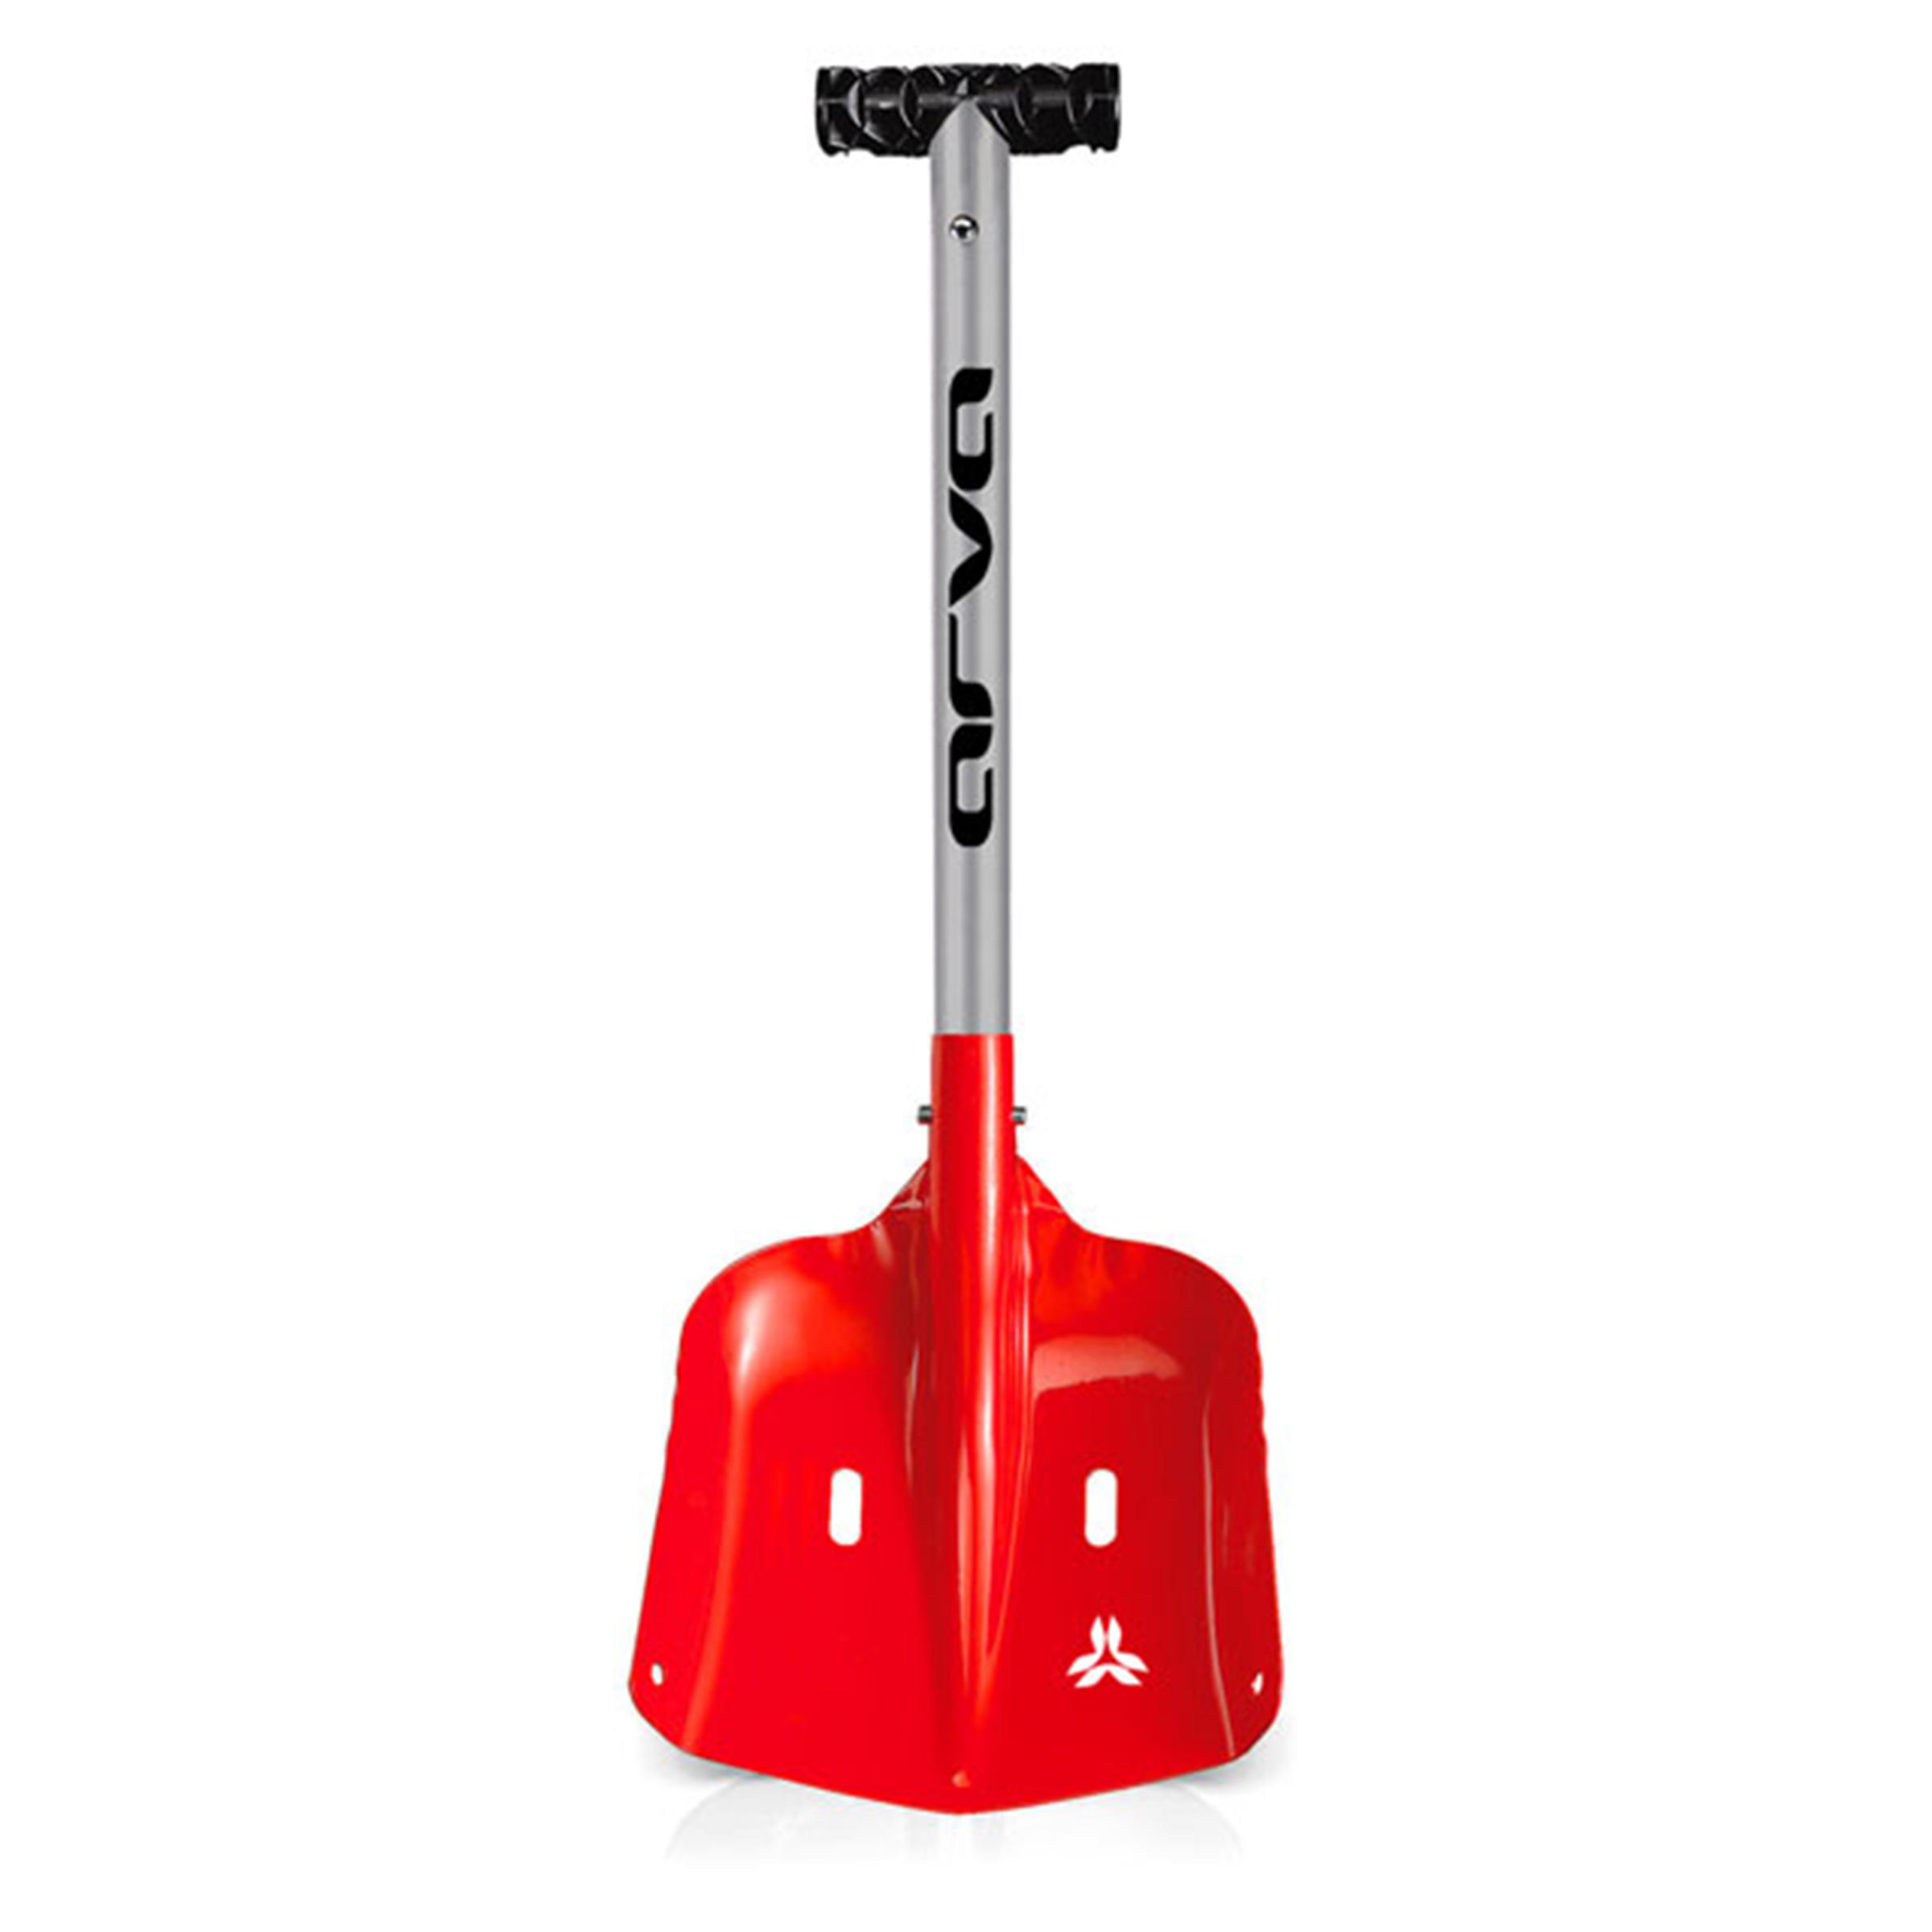 ARVA Red Access avalanche shovel